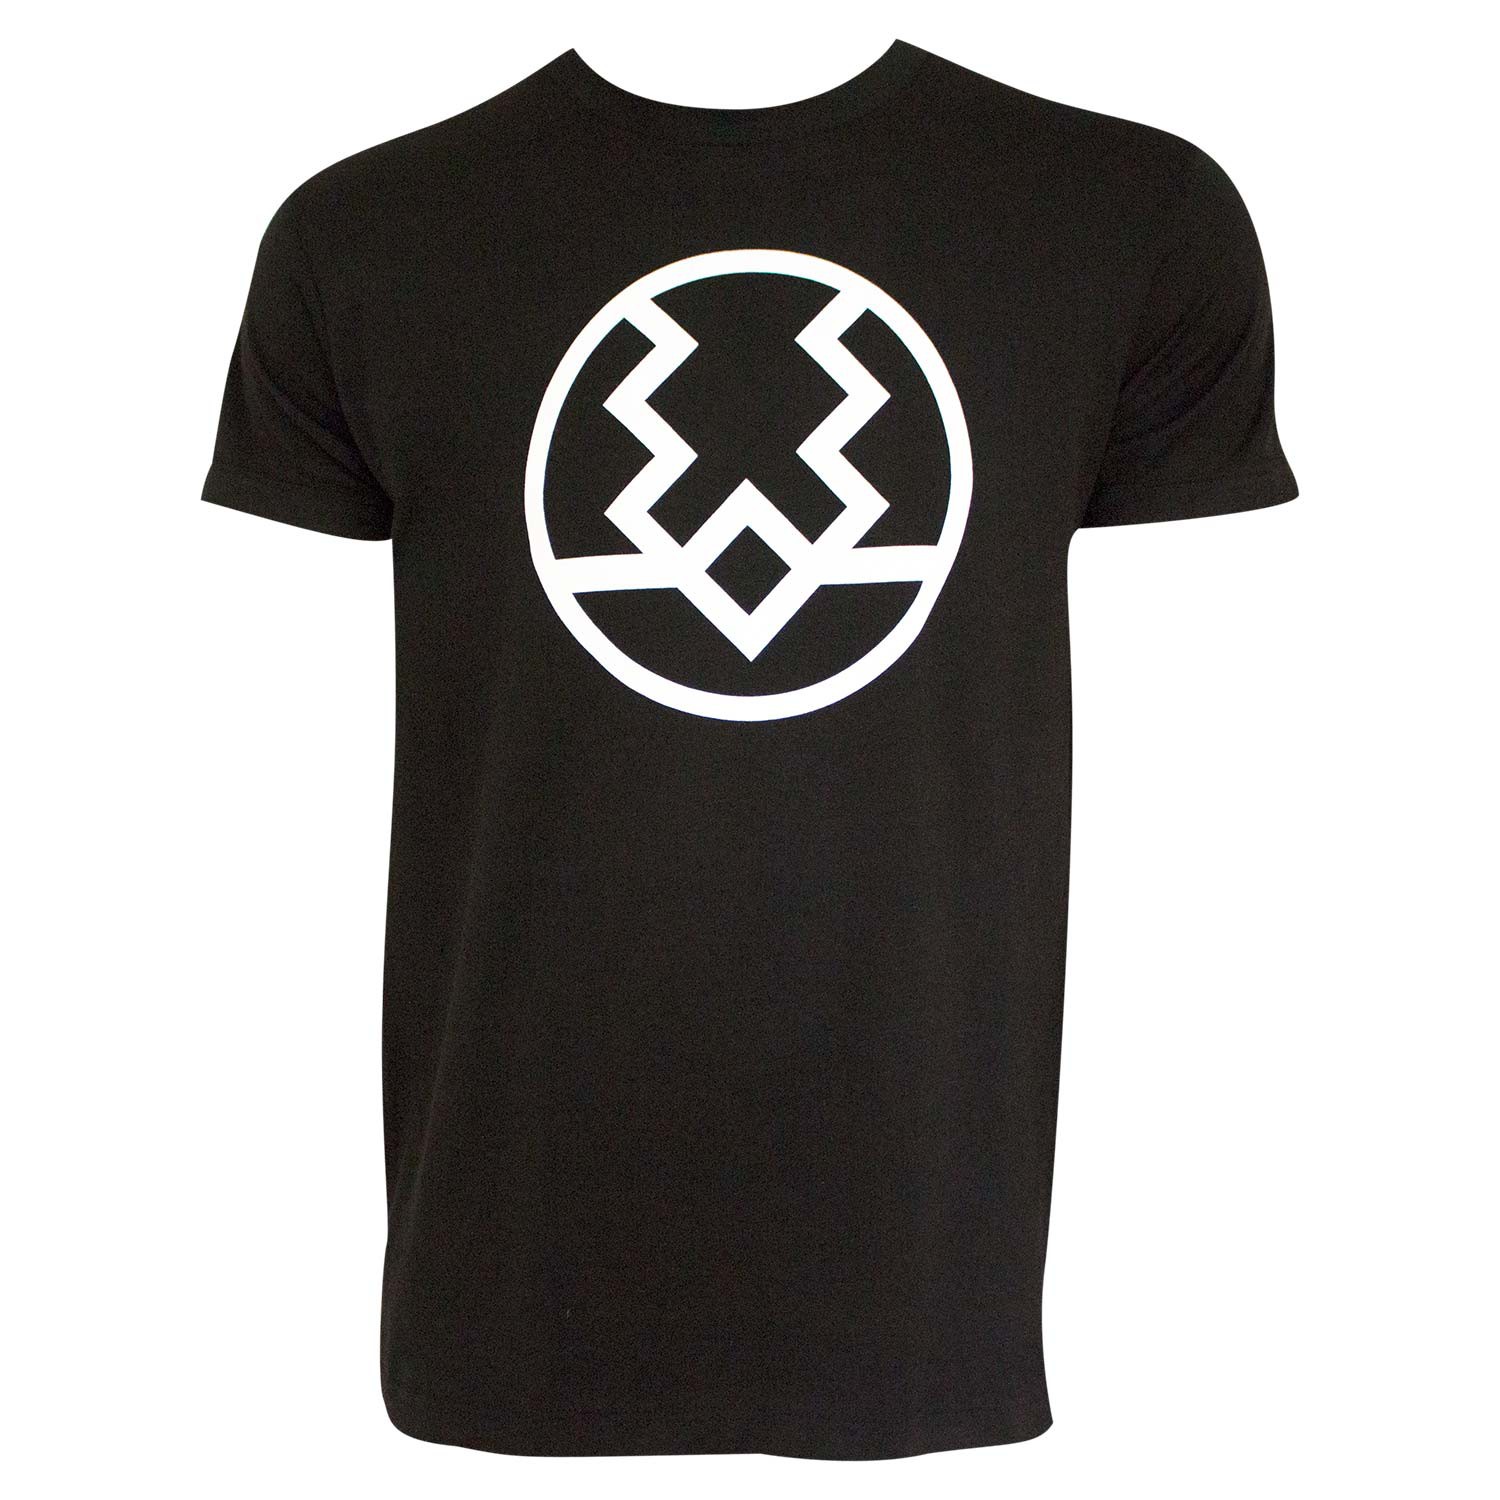 Black Bolt Logo Tee Shirt